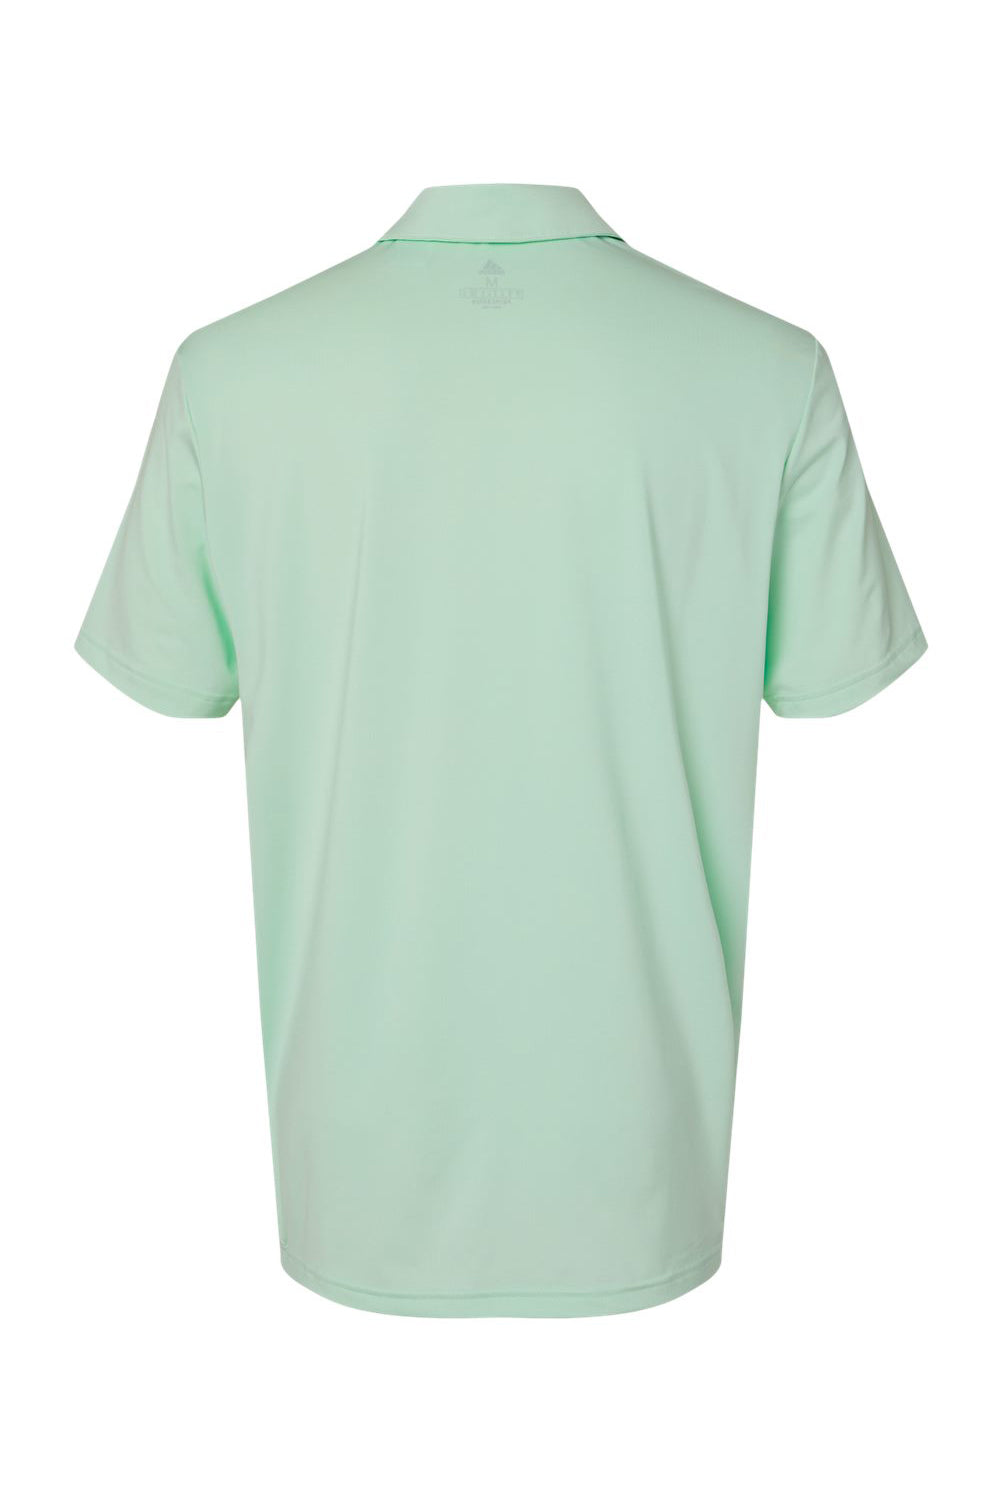 Adidas A514 Mens Ultimate Short Sleeve Polo Shirt Clear Mint Flat Back